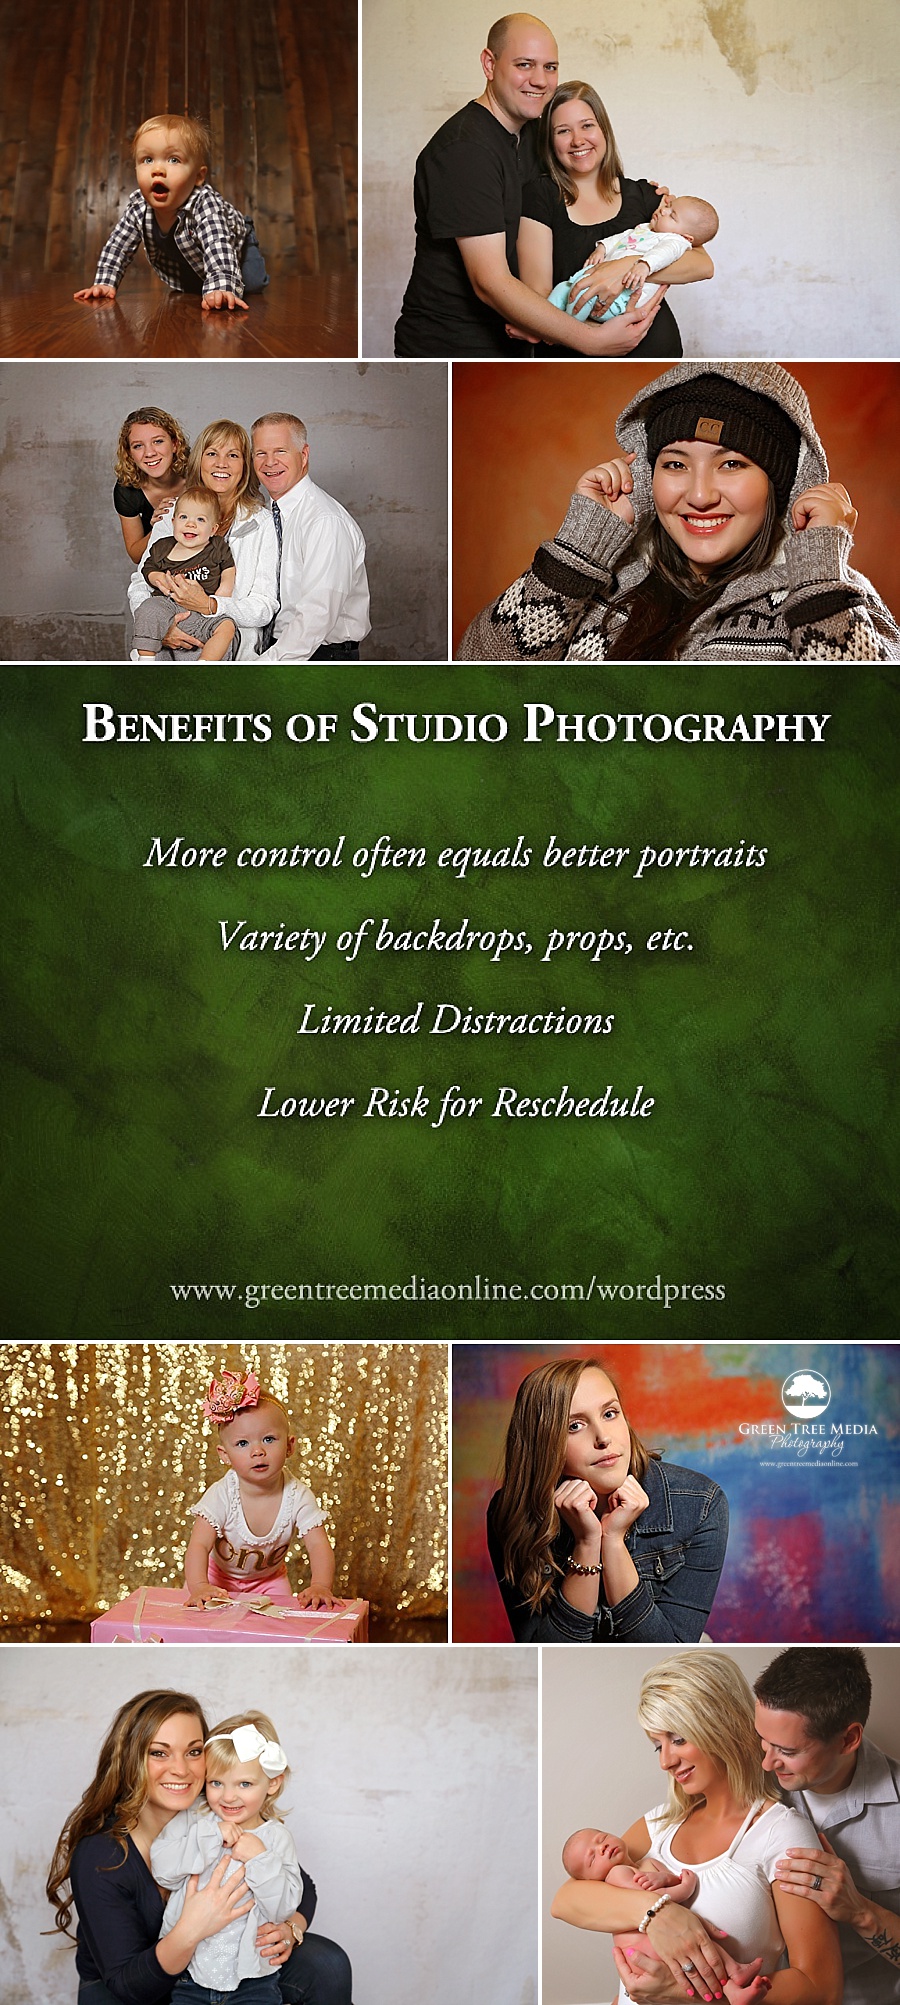 Benefits of Studio Photography